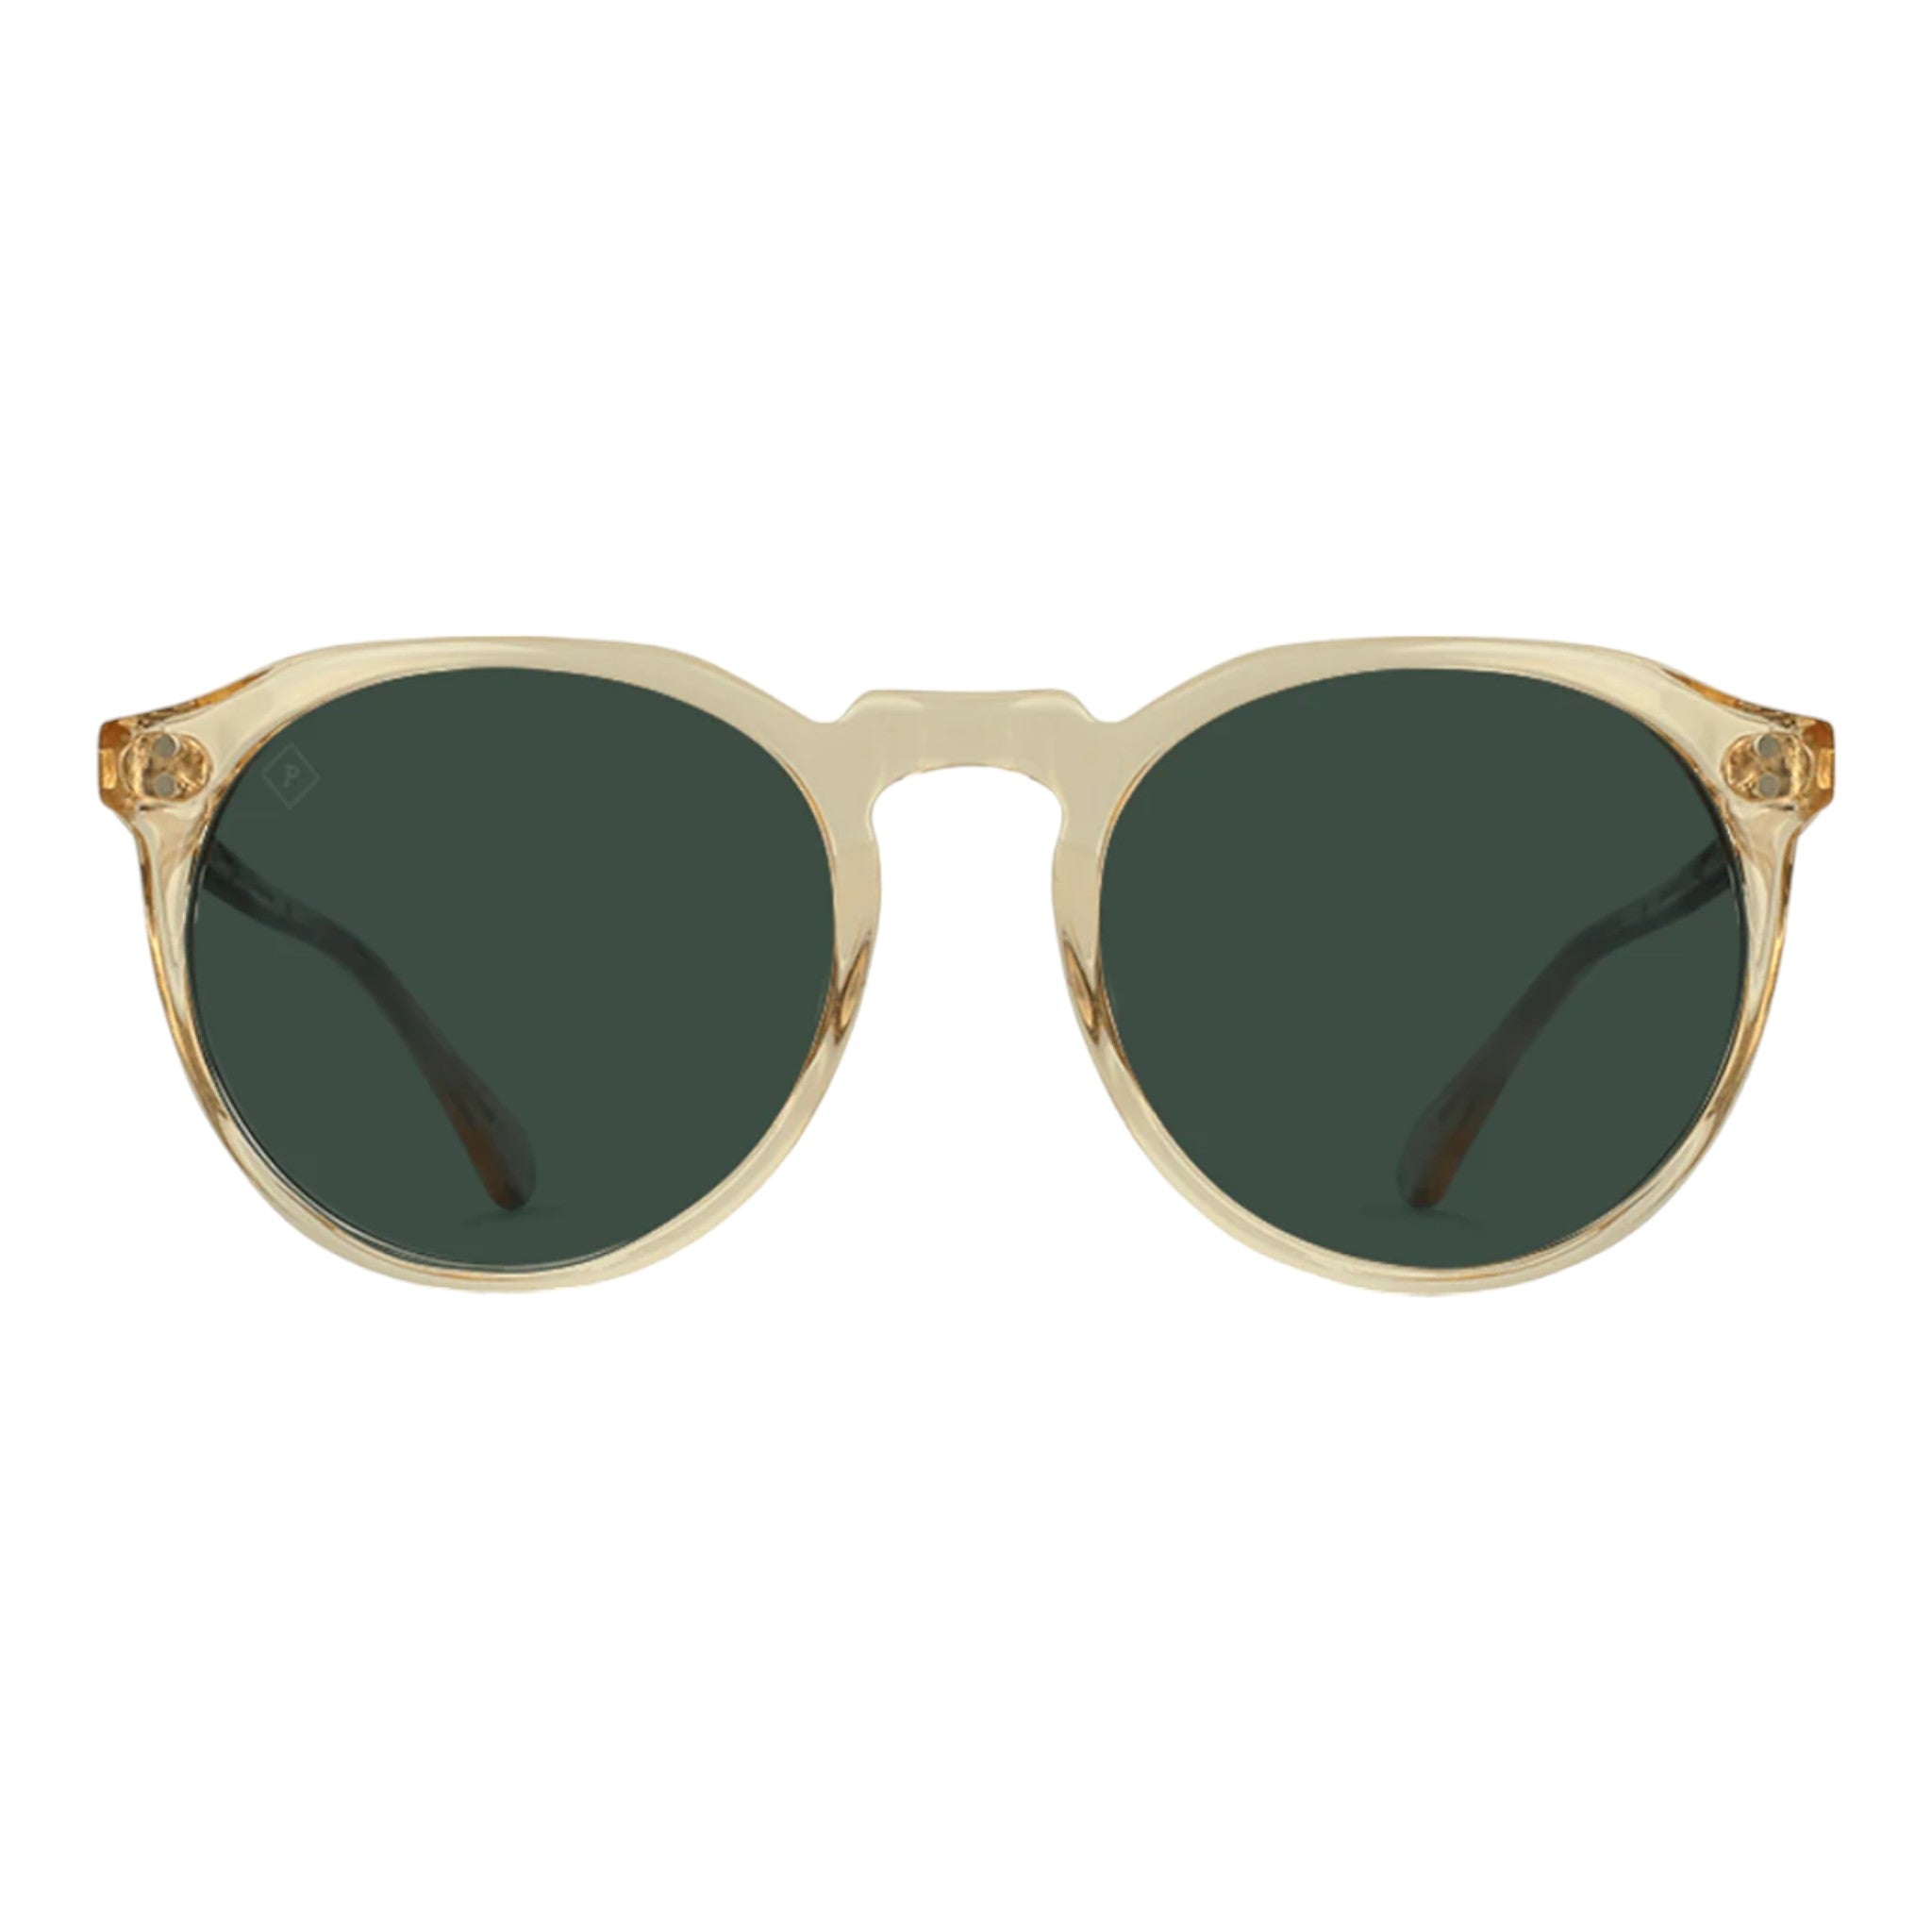 Raen - Remmy 52 Sunglasses - Champagne Crystal/Green Polarized